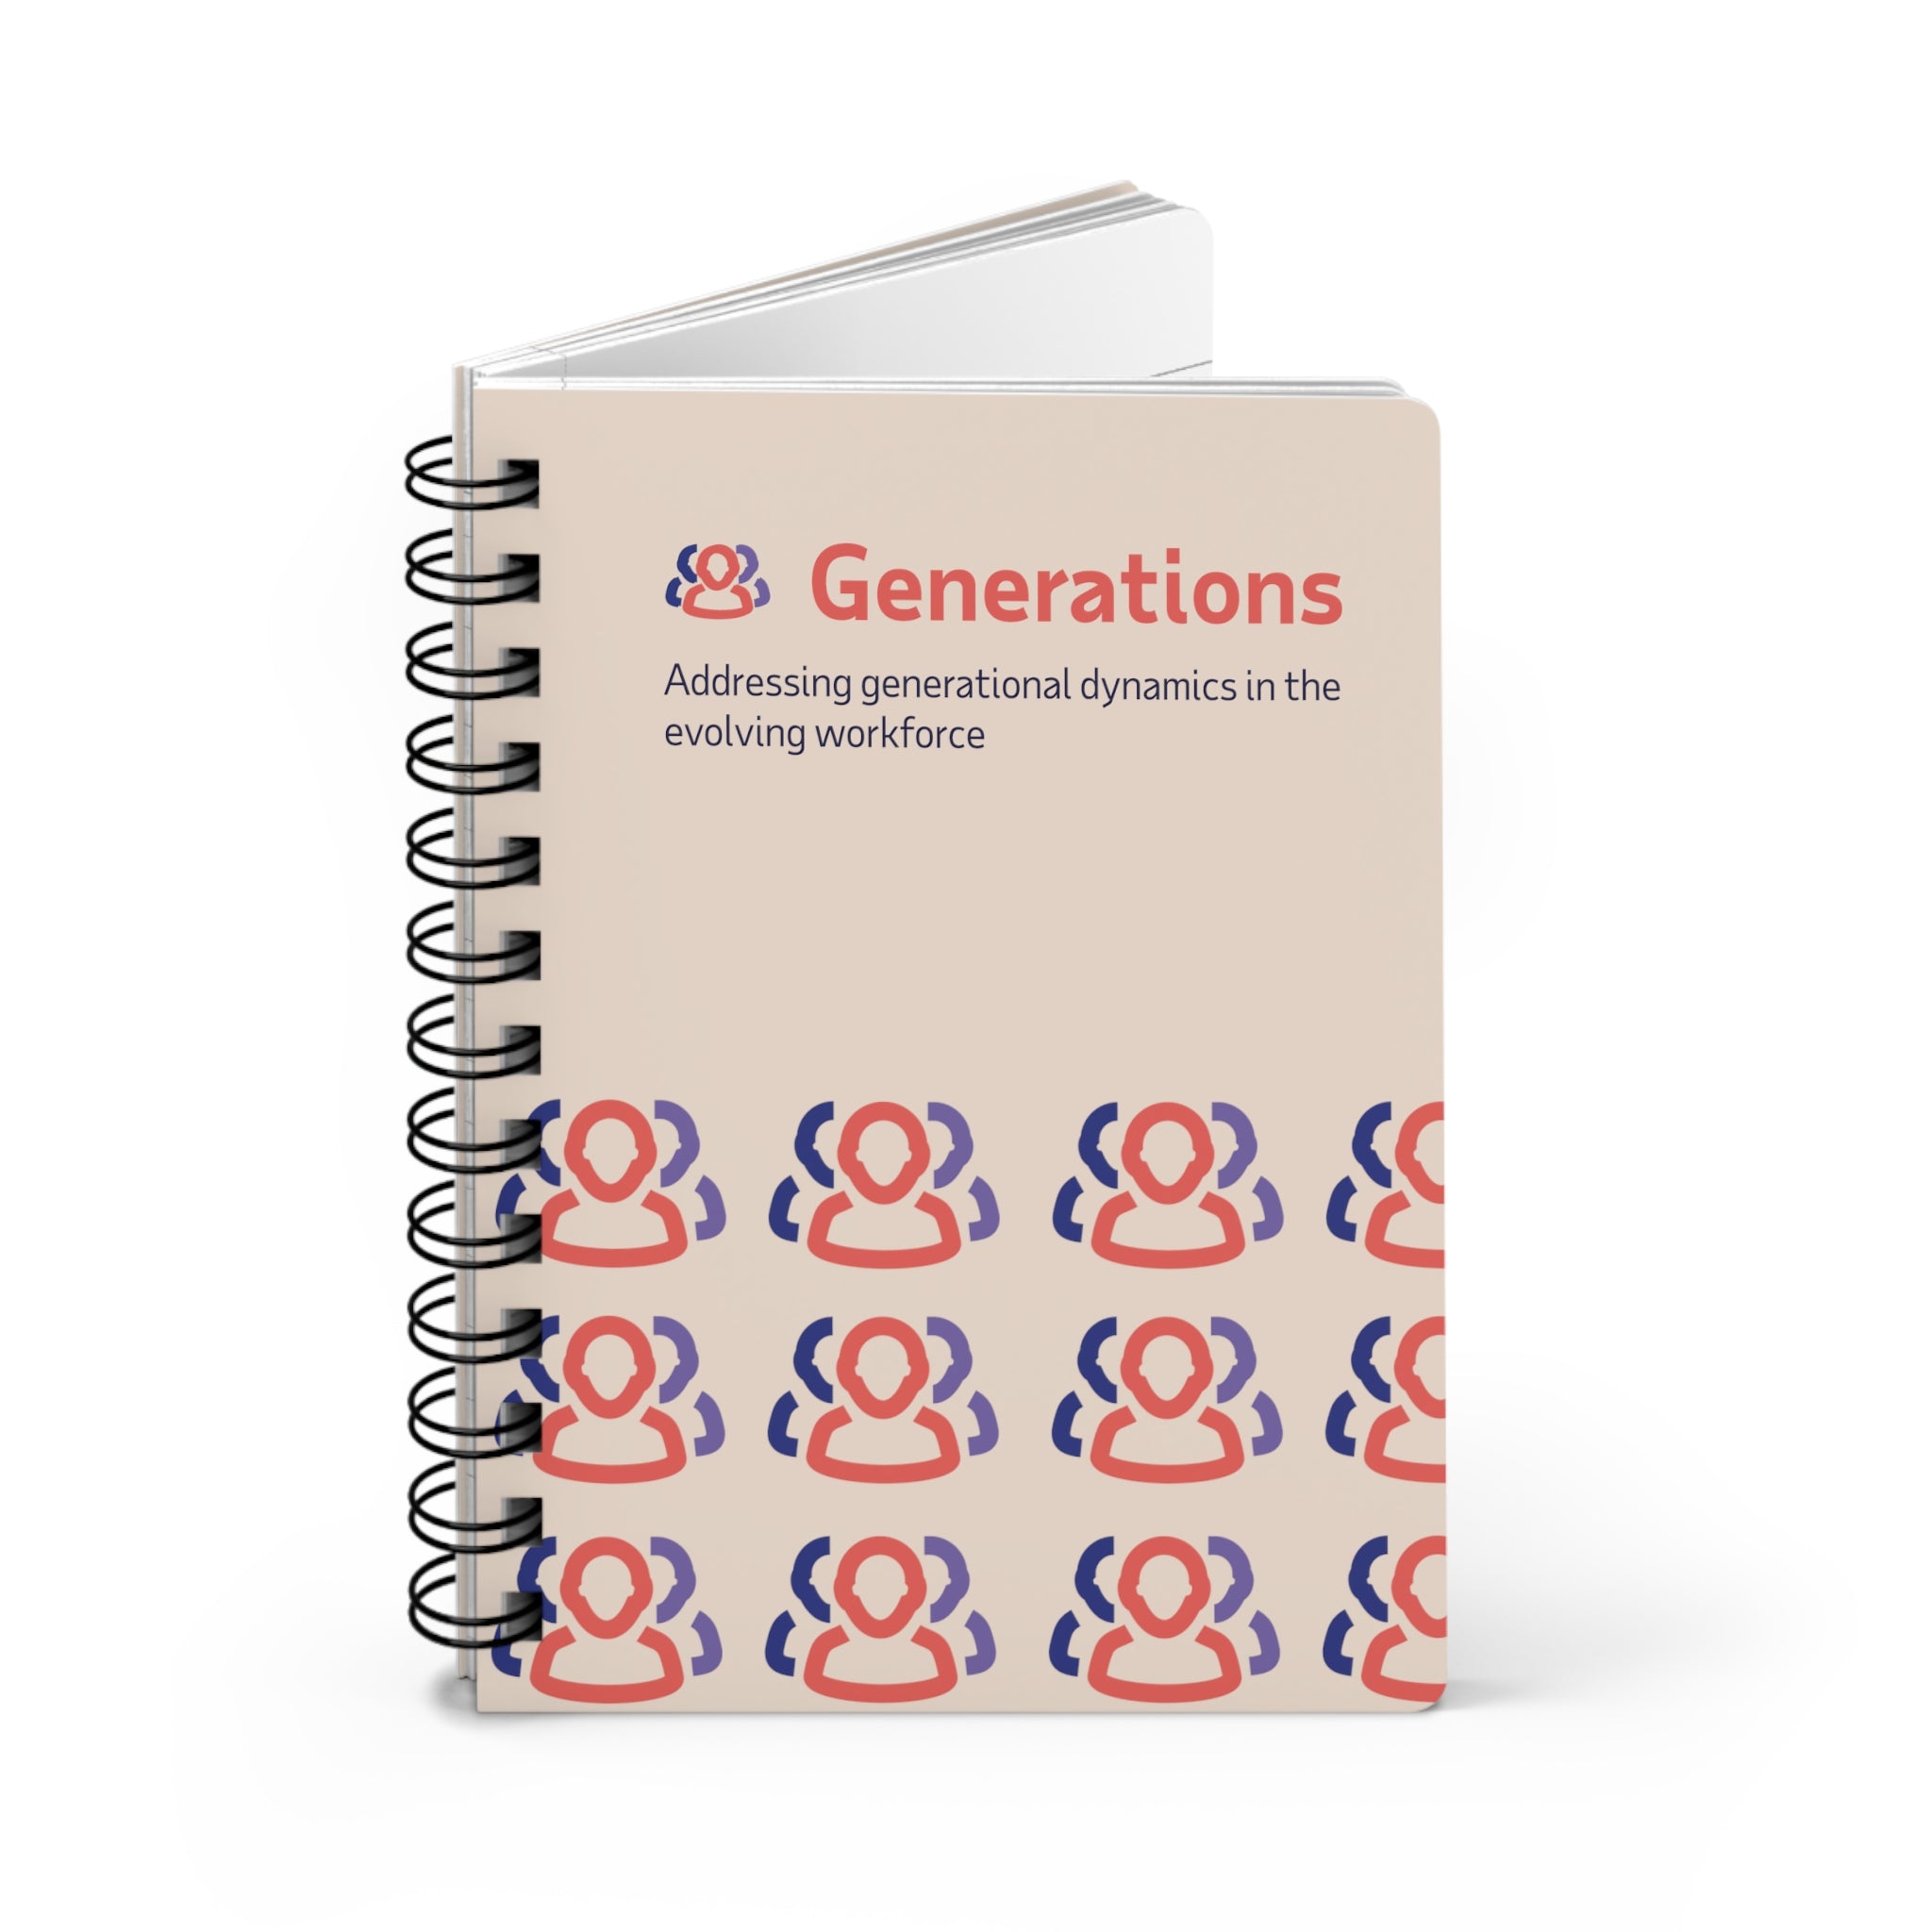 Generations BRG Tan Spiral Bound Journal